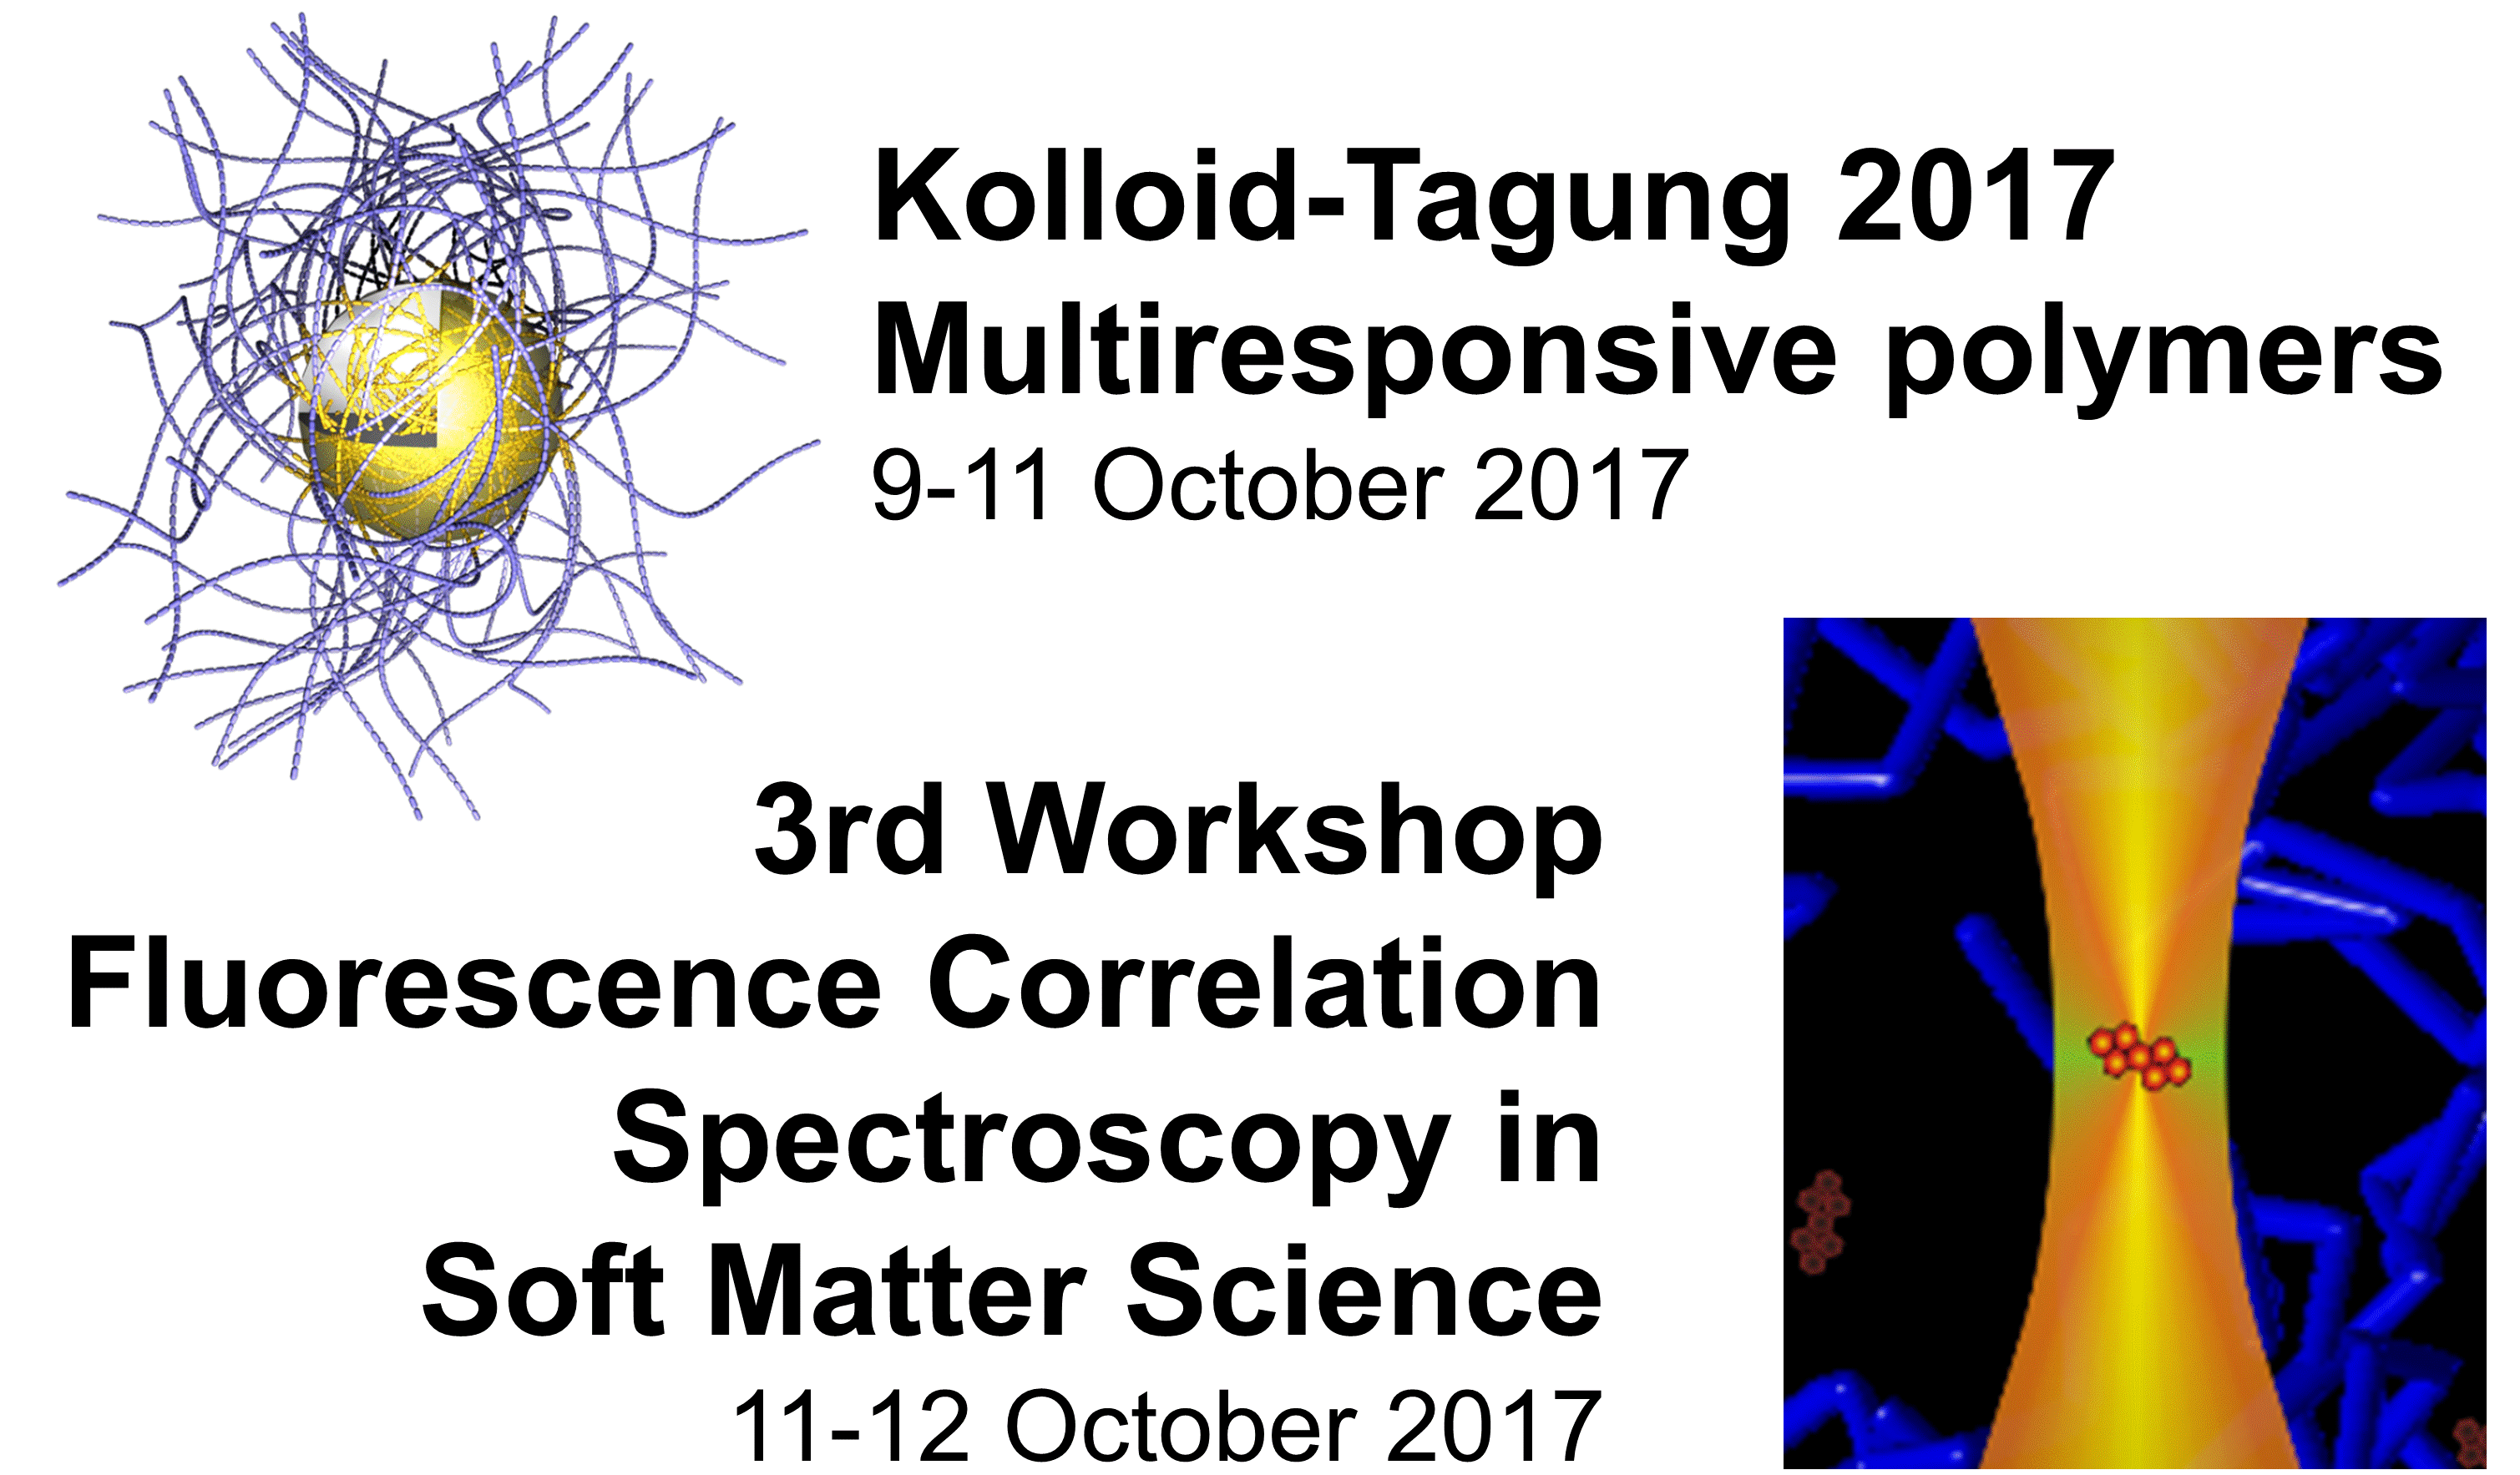 Kolloid-Tagung and FCS-Workshop